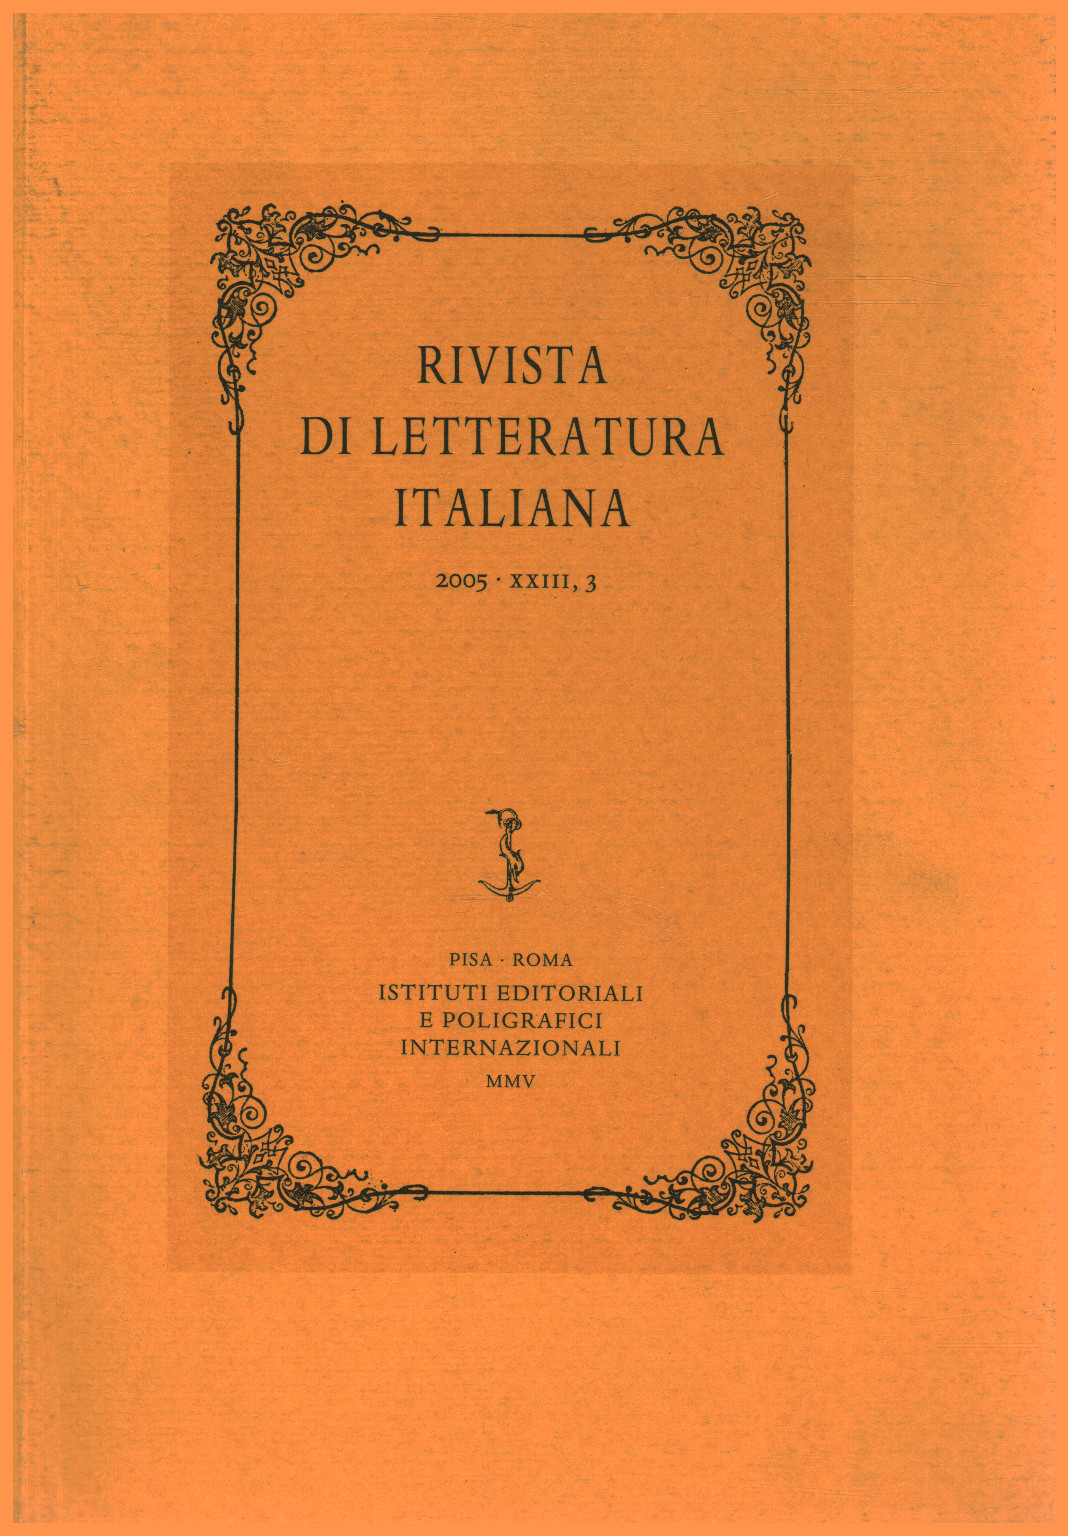 Rivista di letteratura italiana 2005,XXIII,3, s.a.